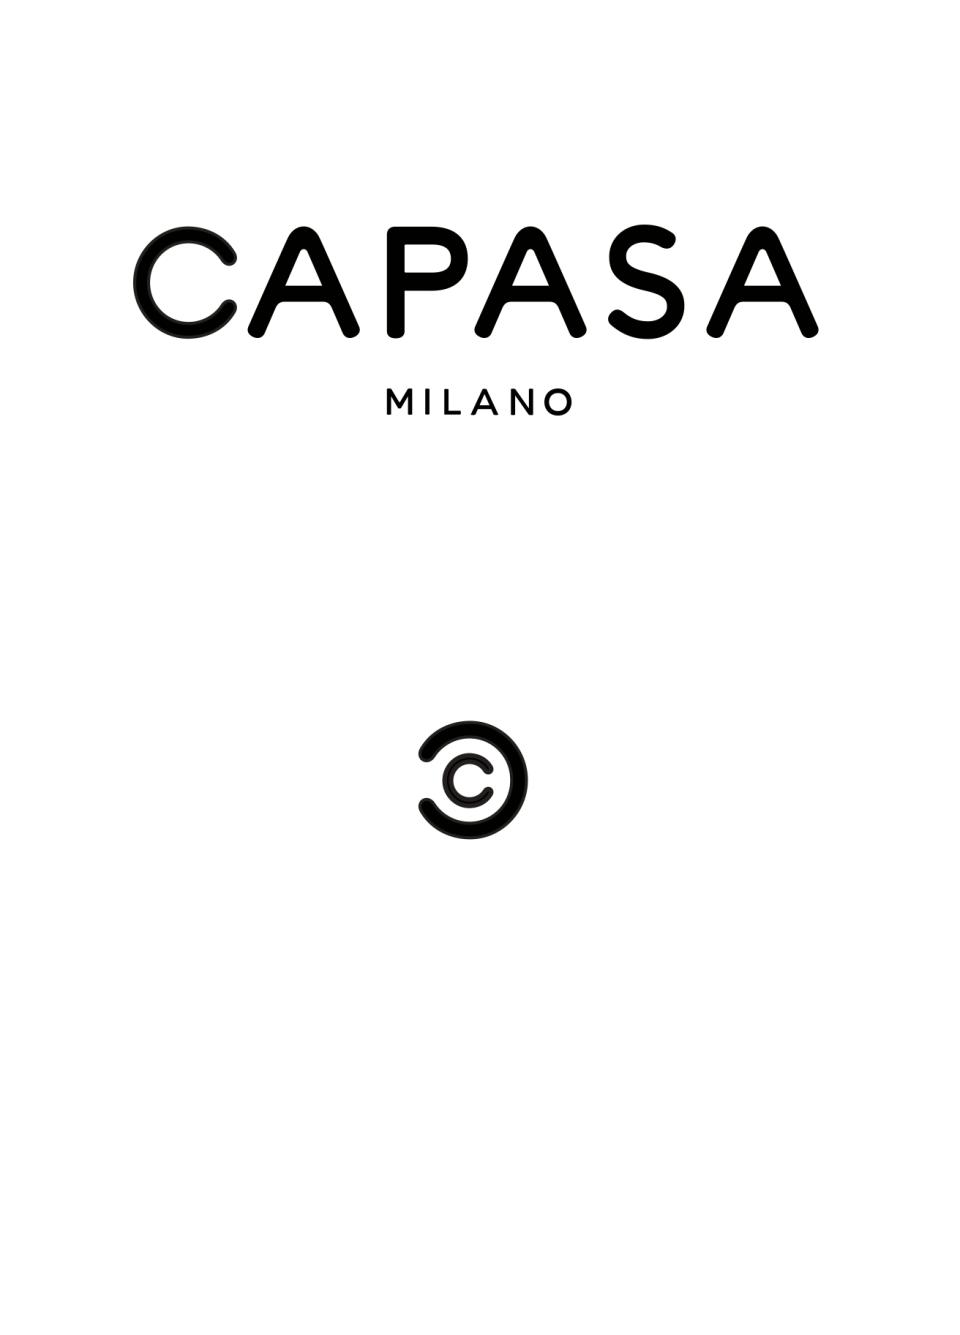 The Capasa Milano logo. - Credit: image courtesy of Capasa Milano